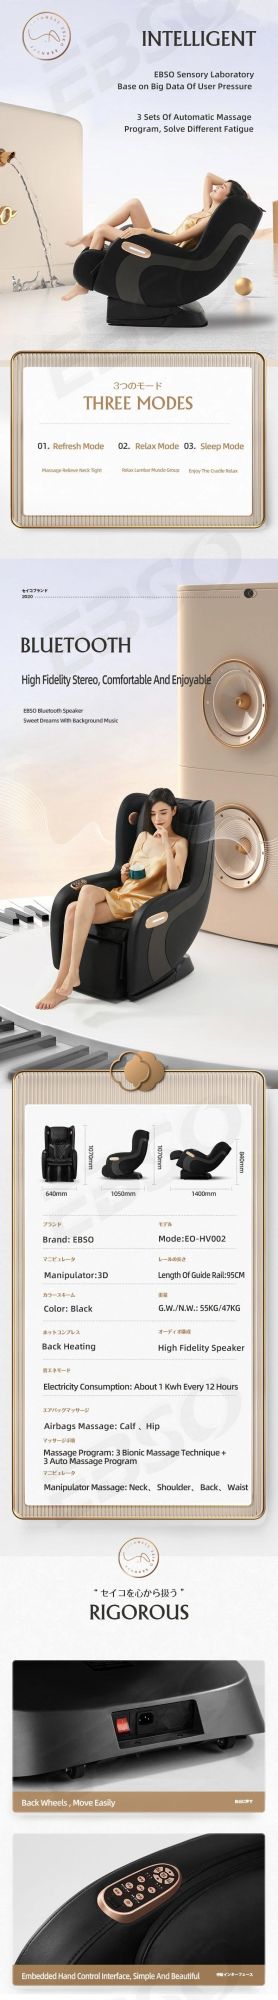 Luxury Cheap Price Full Body Electric Smart Recliner 3D Hand SL Track Zero Gravity Shiatsu 4D Massage Chair for Home Office